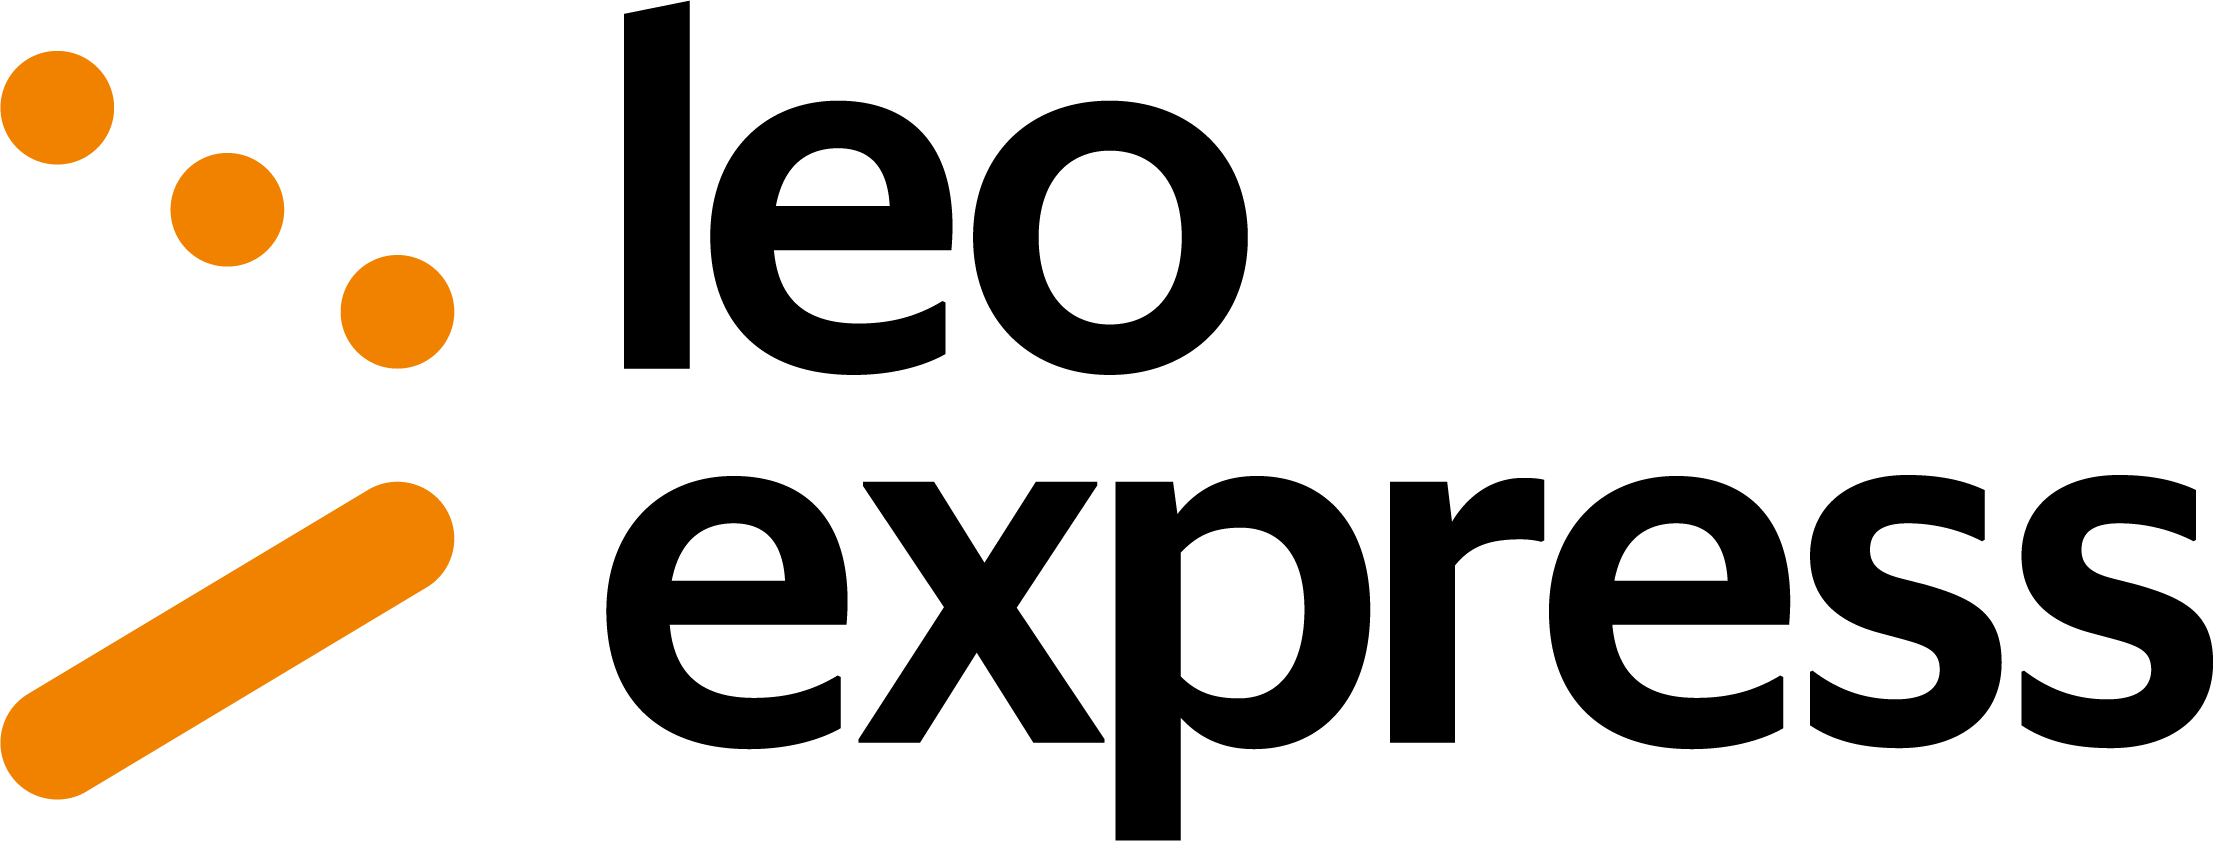 Leo express logo